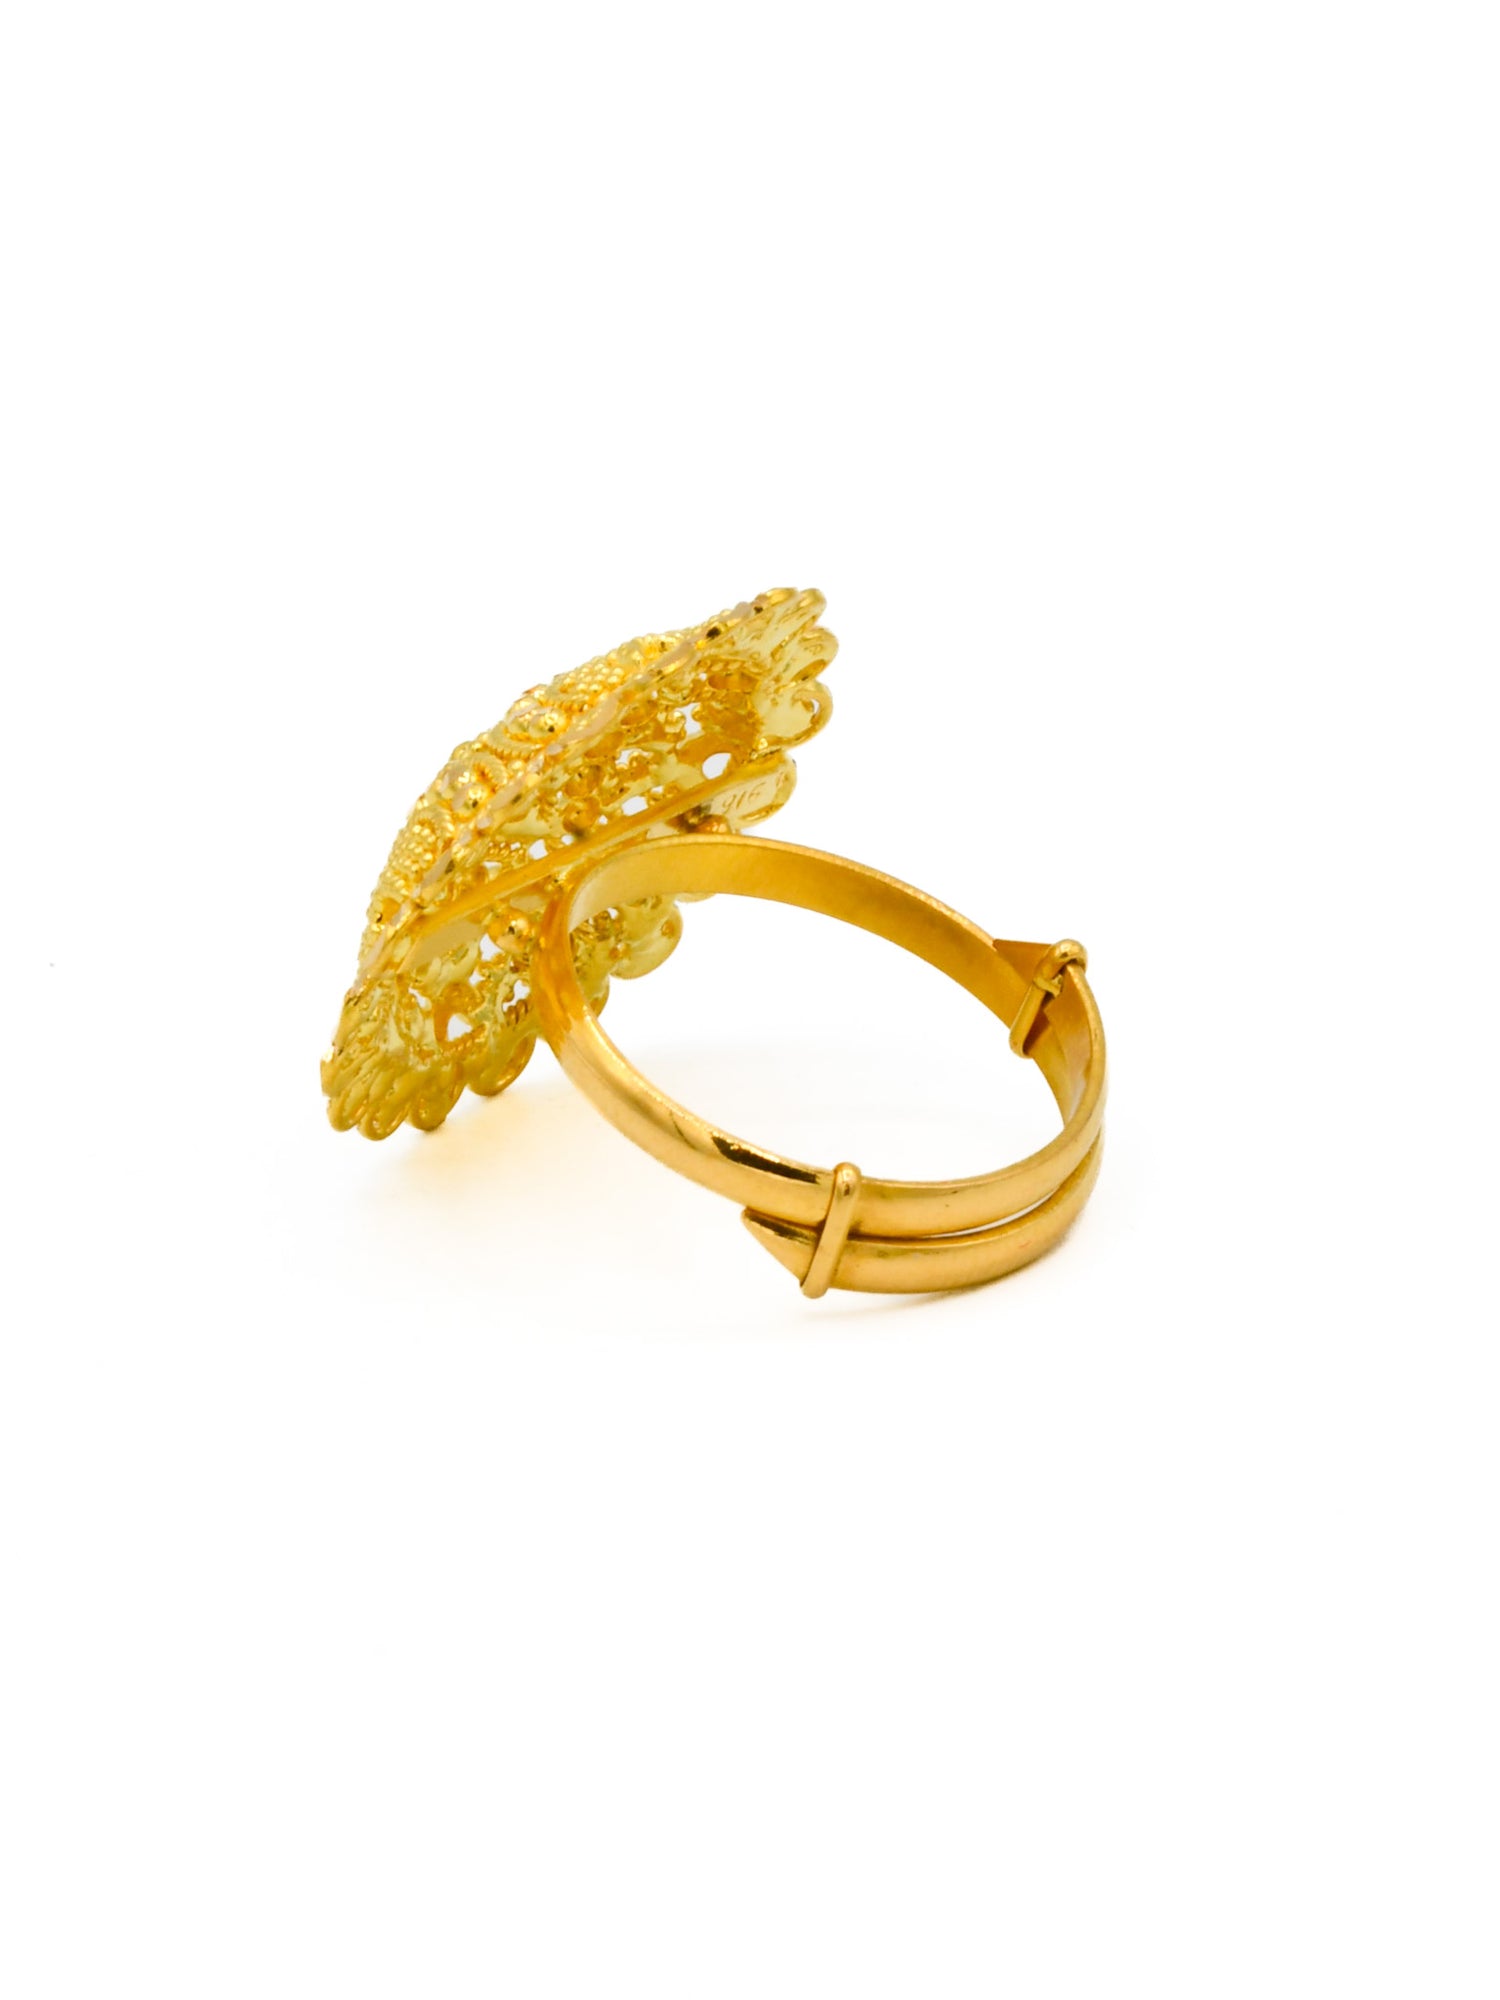 22ct Gold Filigree Round Top Adjustable Ring - Roop Darshan